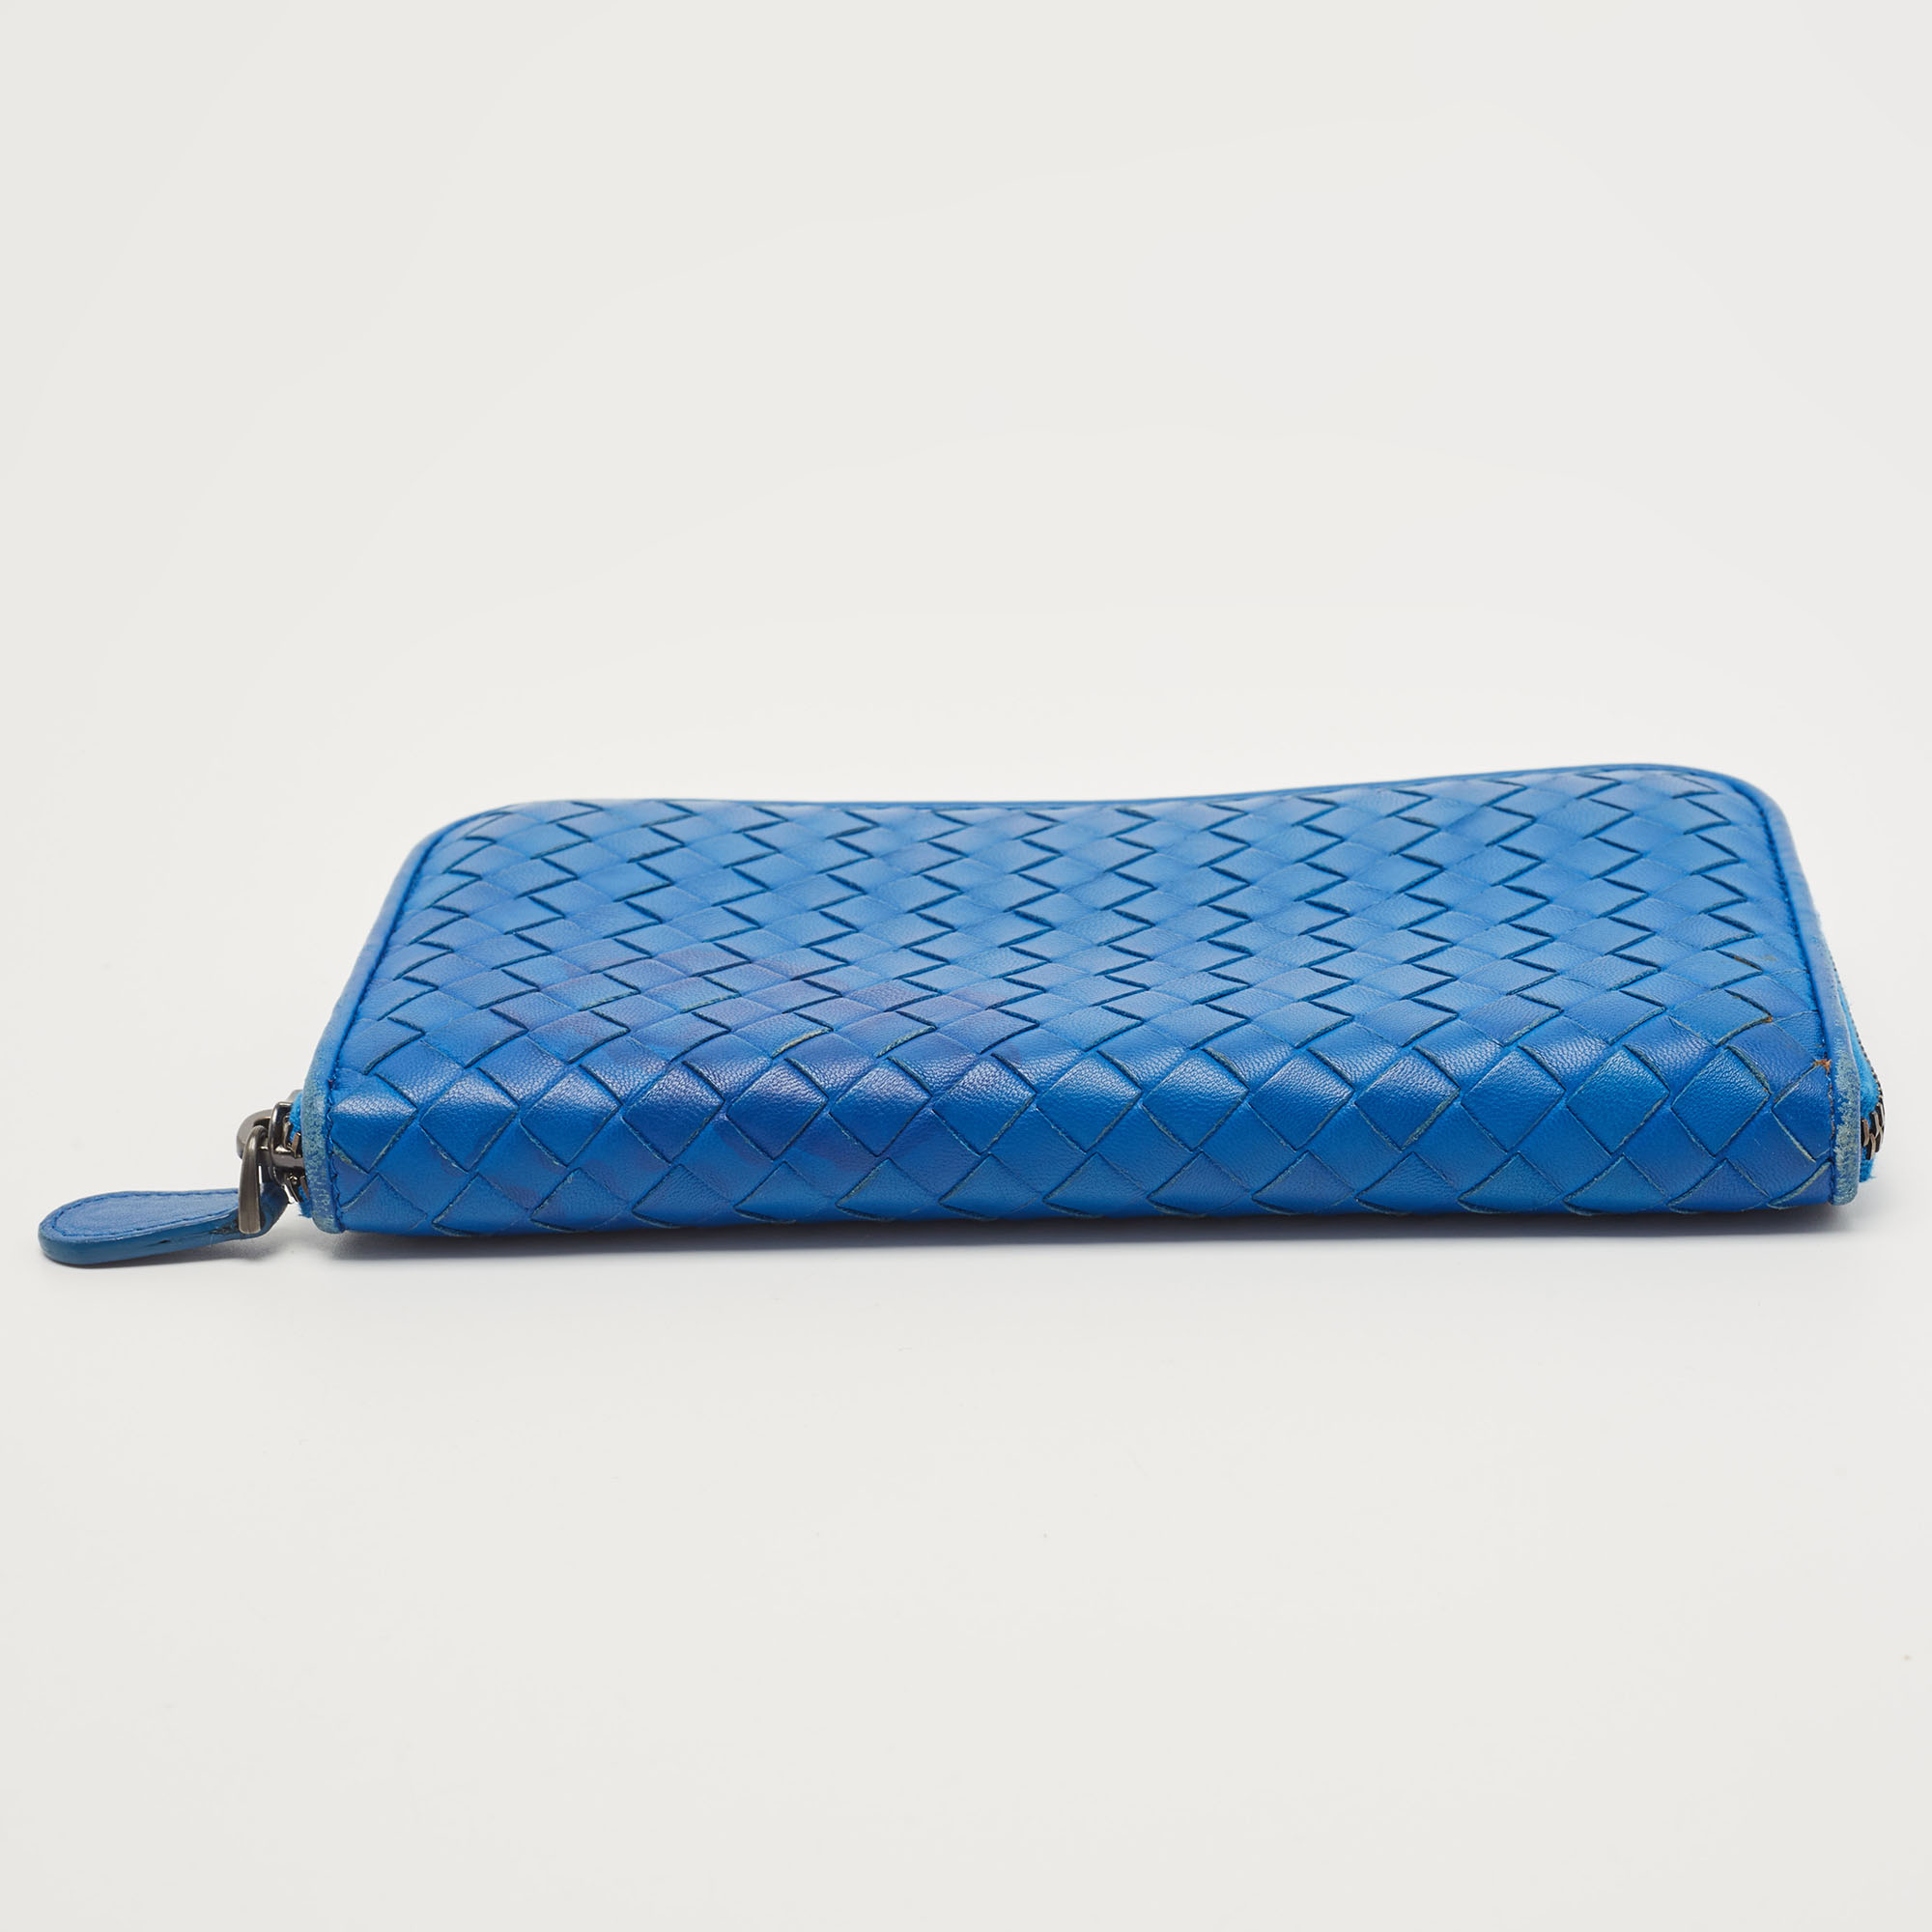 Bottega Veneta Blue Intrecciato Leather Zip Around Wallet